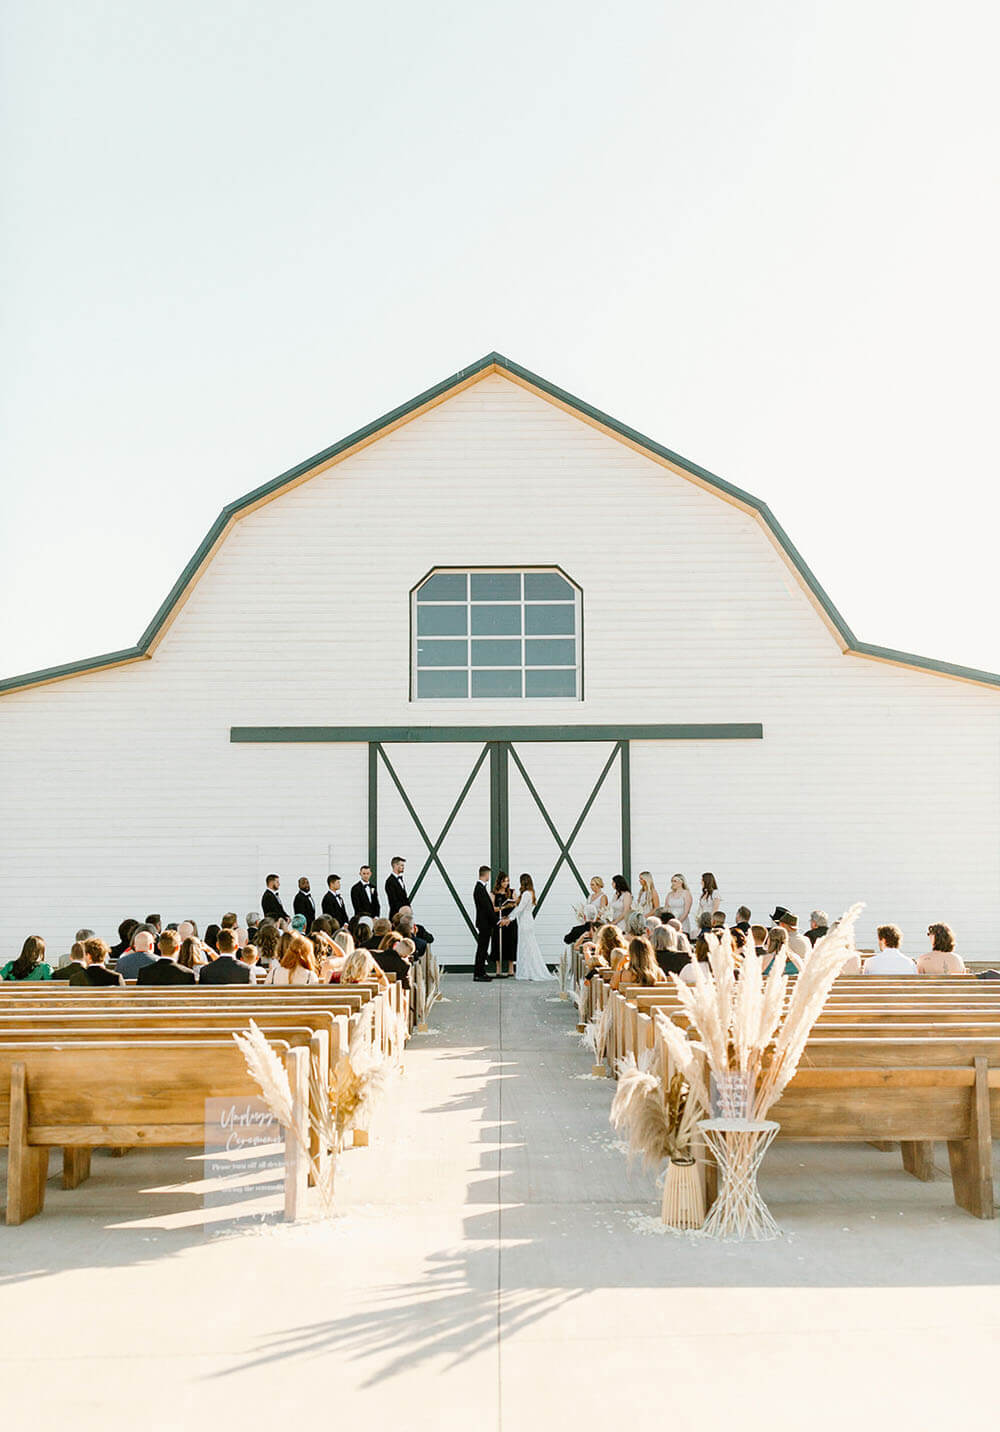 The Butler Barn wedding